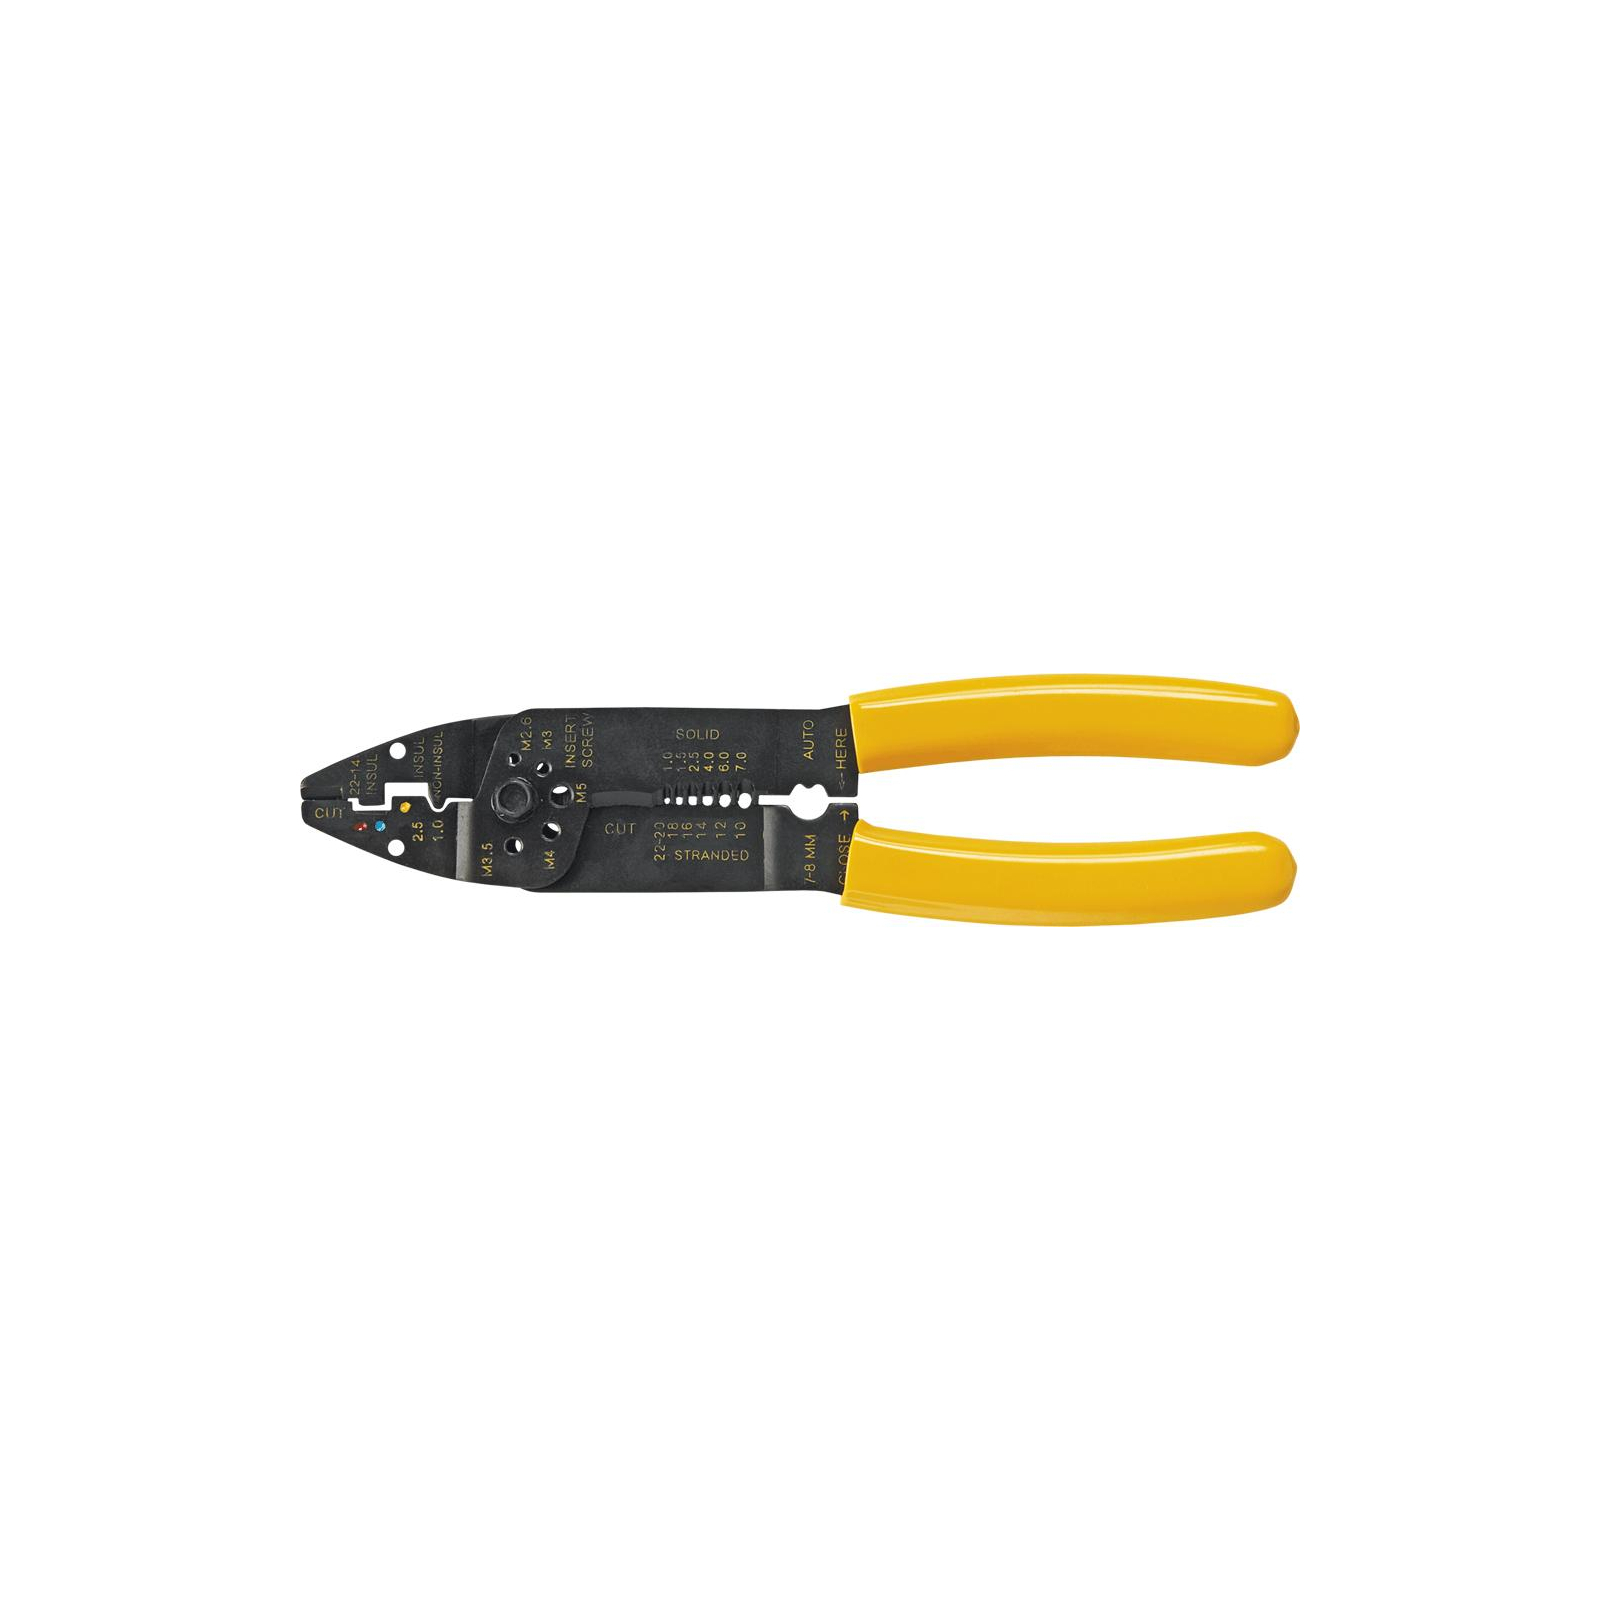 Кліщі Topex для обжима кабельных наконечников, 210 мм (32D404)